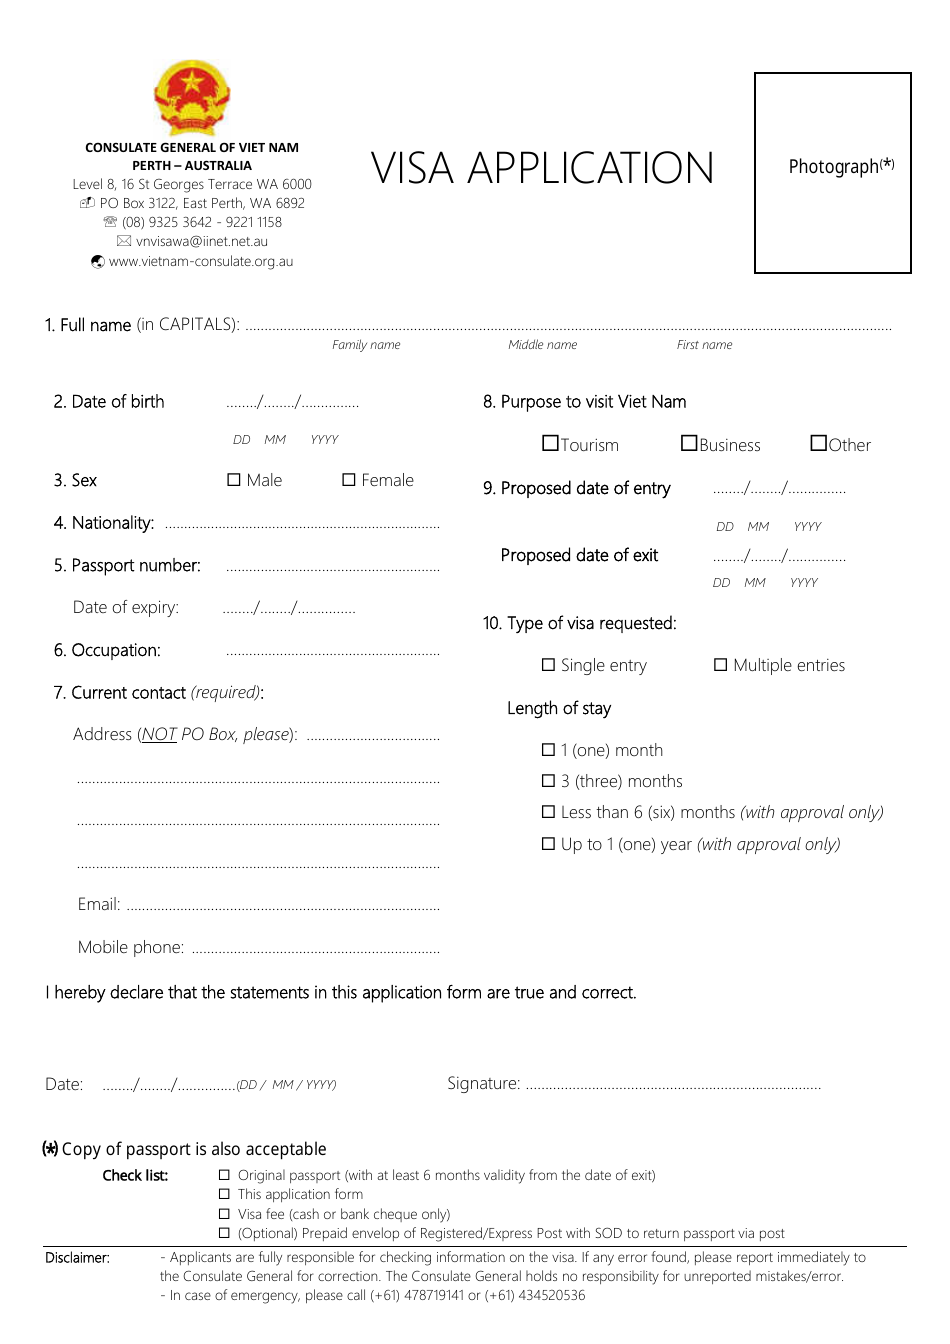 Vietnam Visa Application Form - Consulate General of Viet Nam - Perth, Western Australia, Australia, Page 1